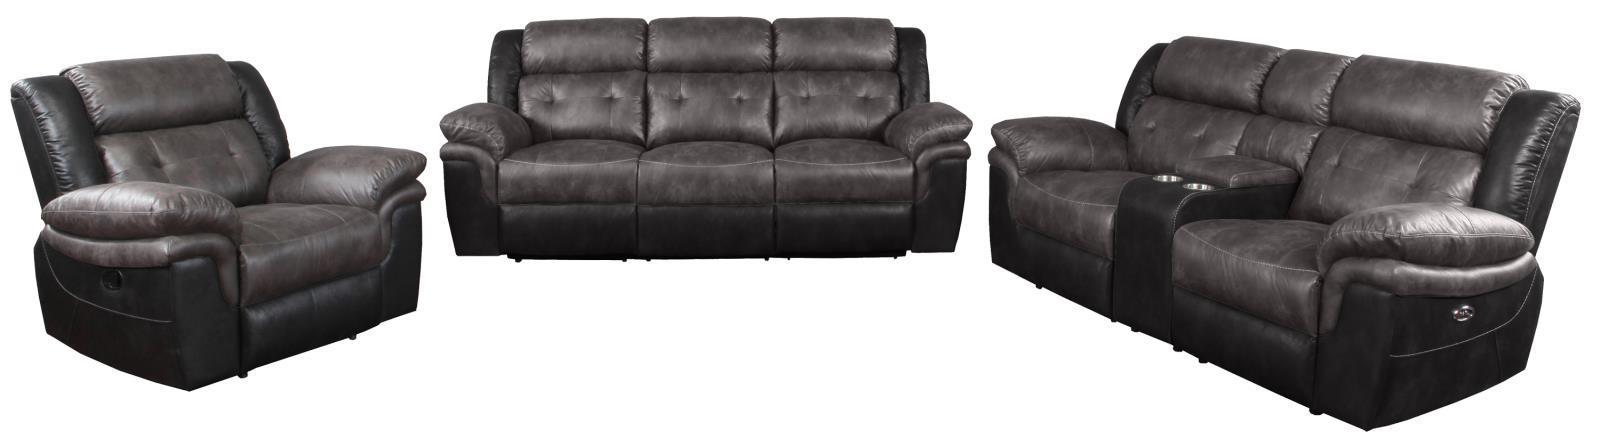 Saybrook - Motion Sofa - Charcoal And Black